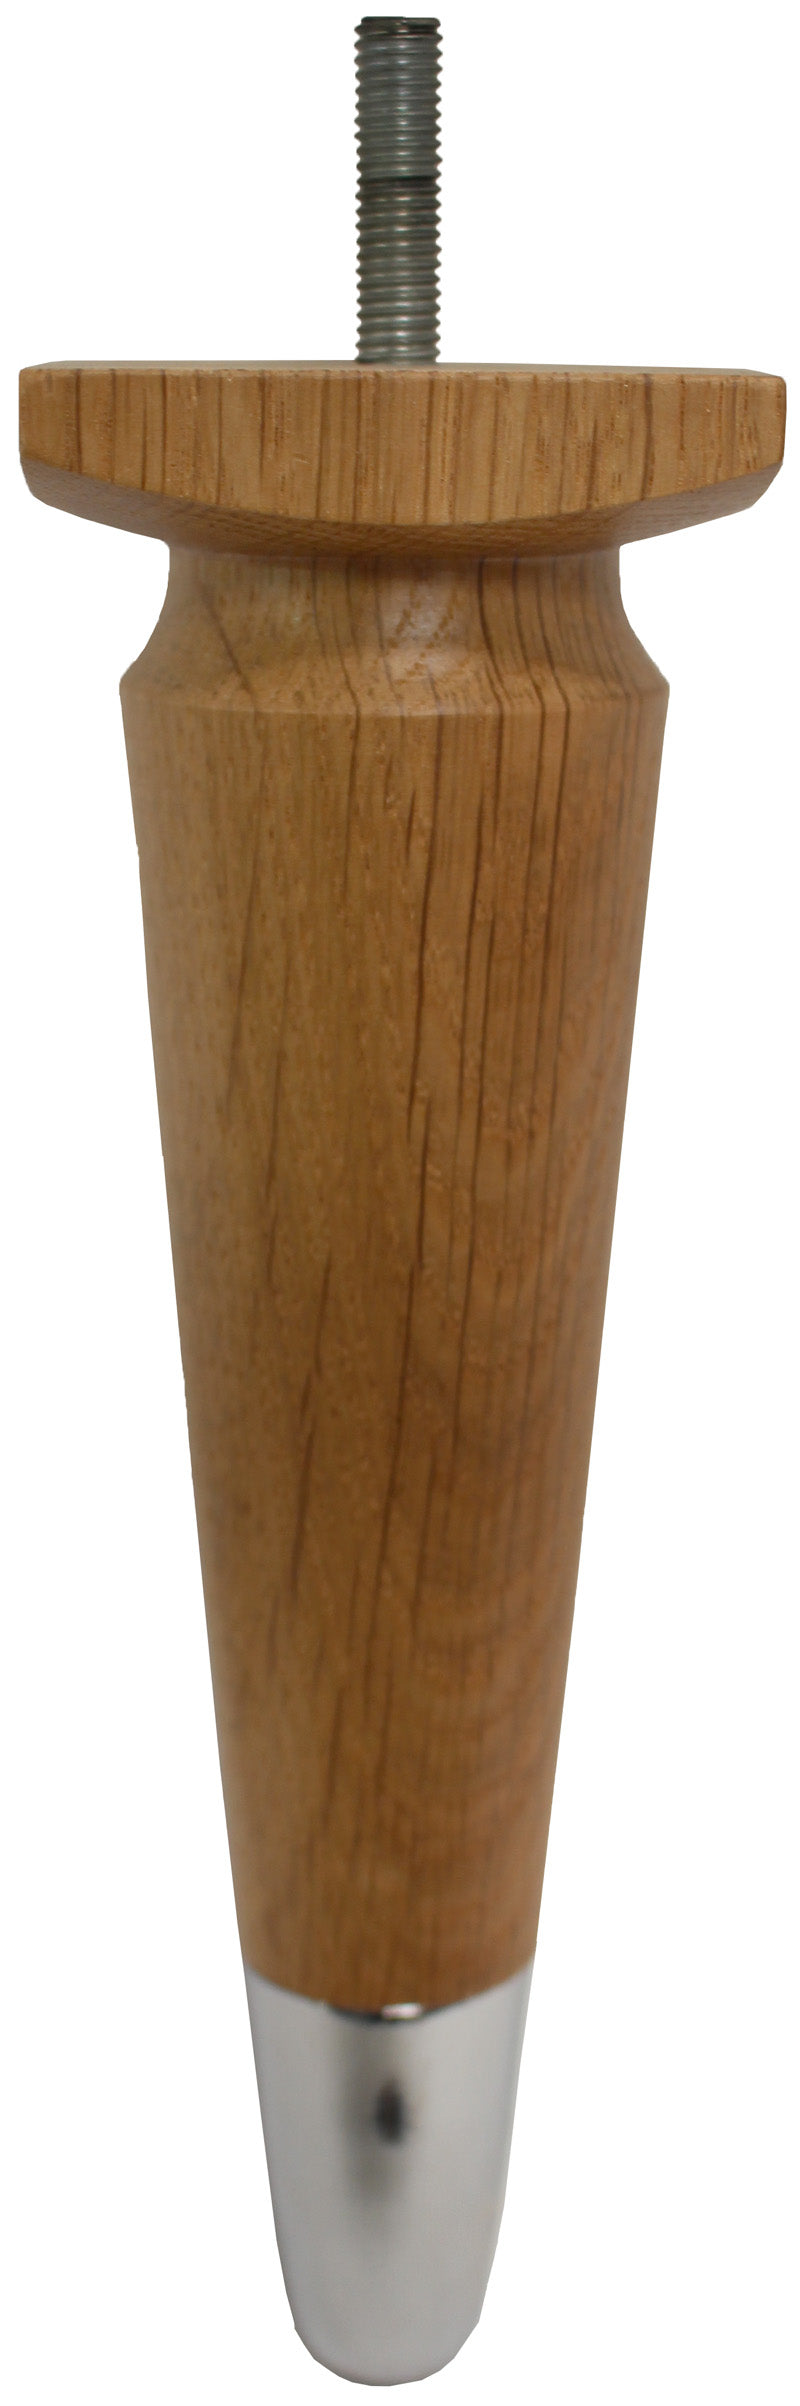 Thelma Solid Oak Furniture Legs - Natural Finish - Chrome Slipper Cups - Set of 4